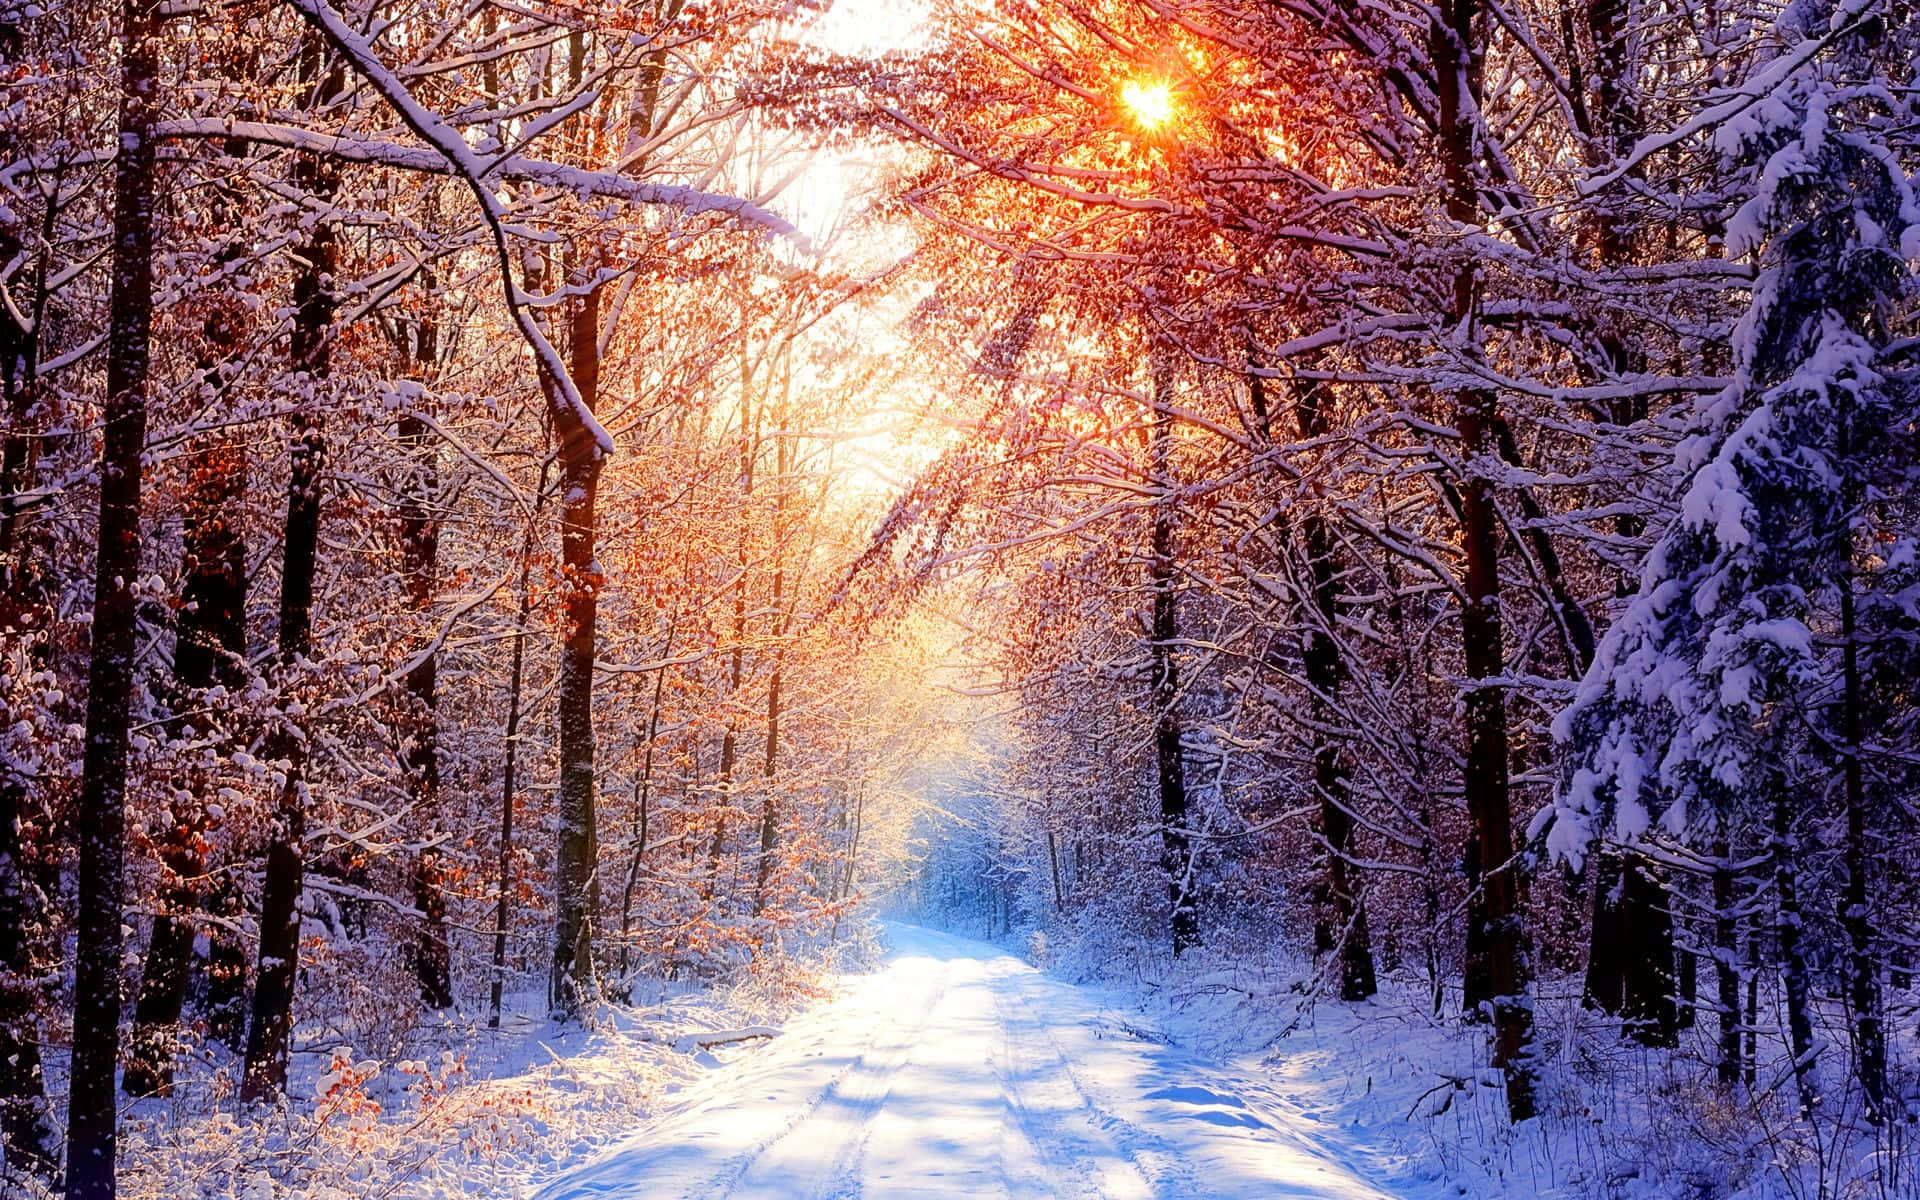 A Refreshing Wintery Stroll through the Snowy Forest